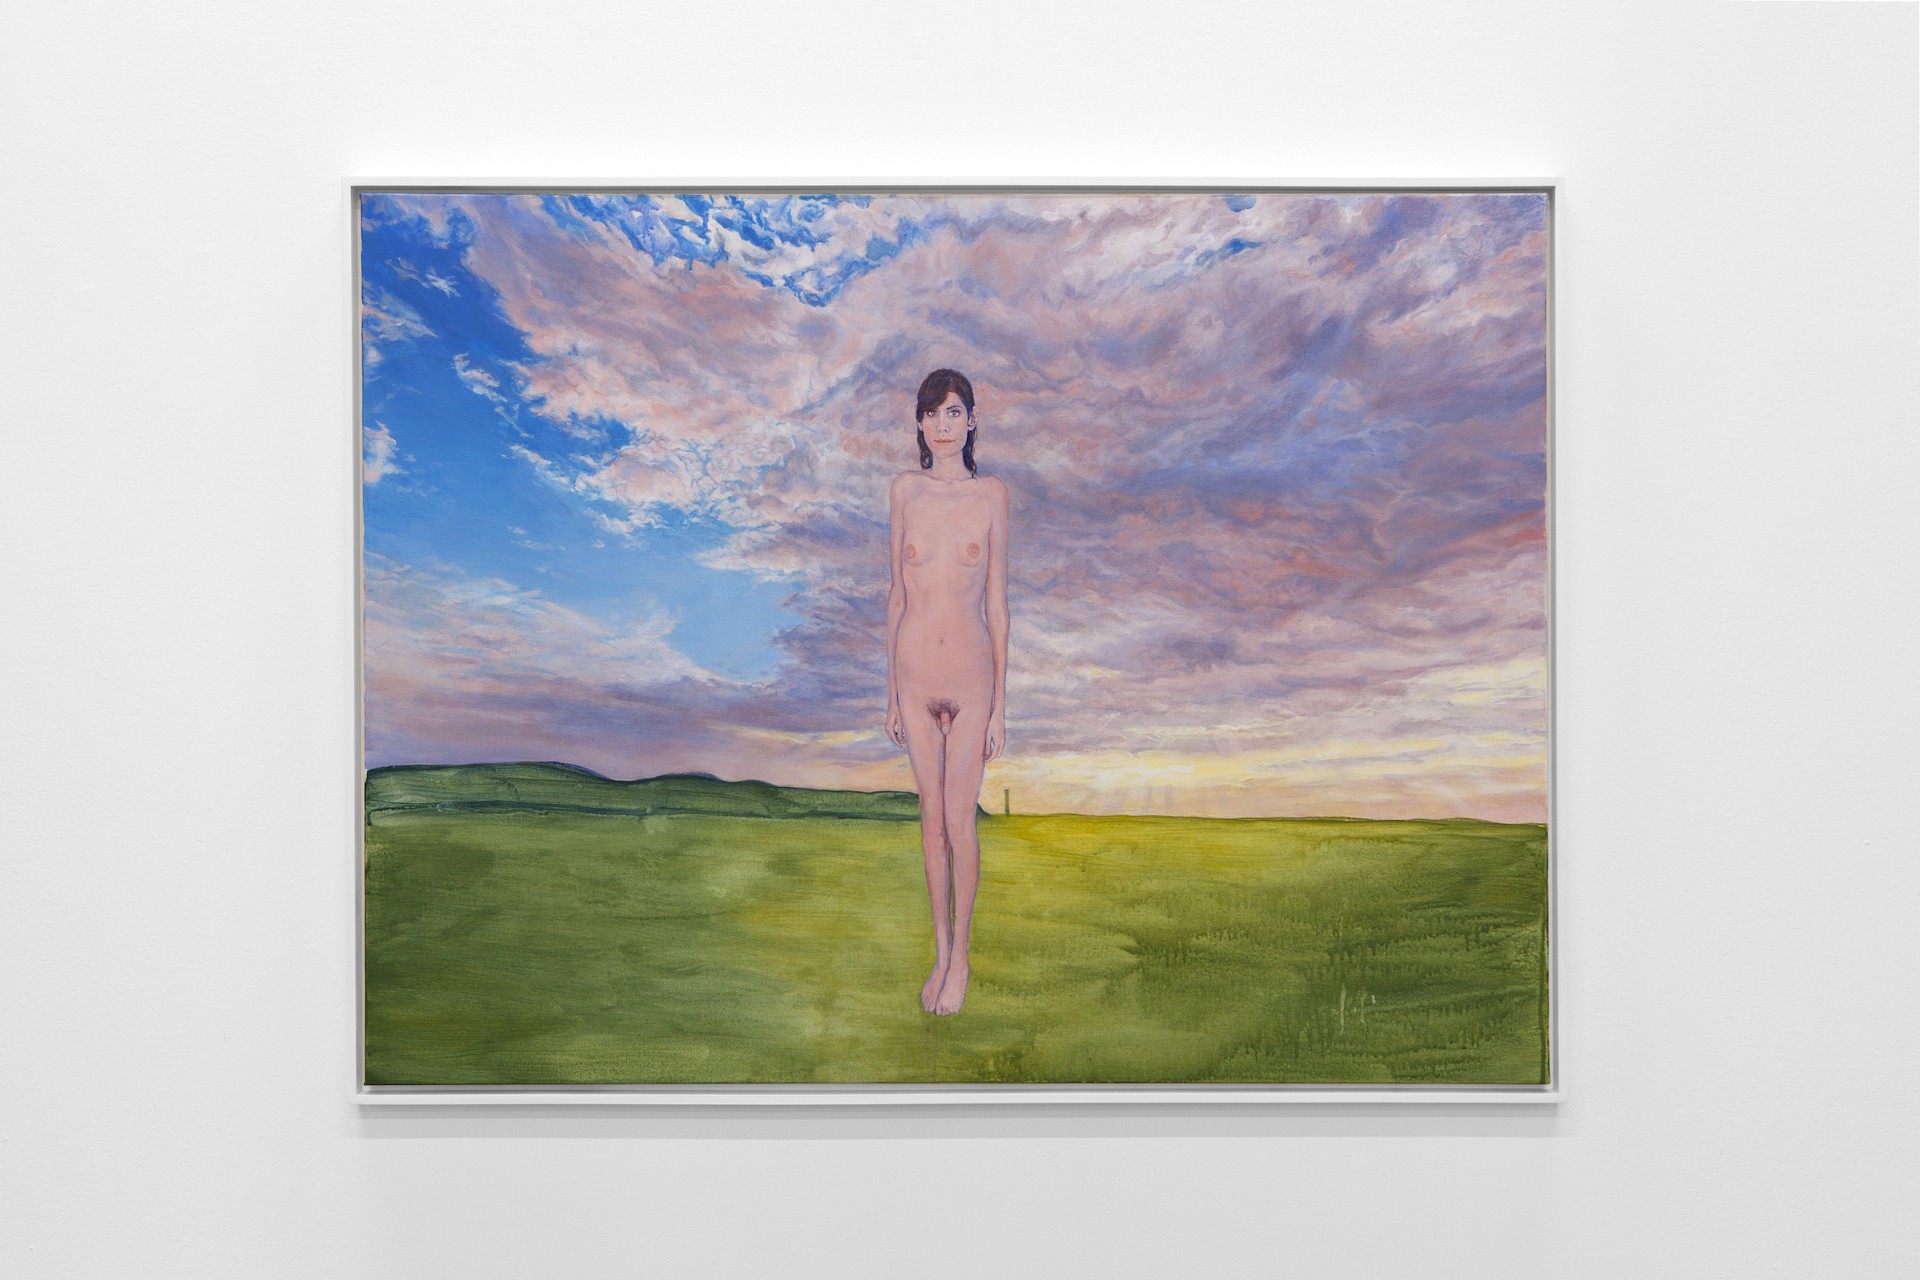 Nash Glynn, *Standing (Self Portrait)*, 2018. Acrylic on canvas